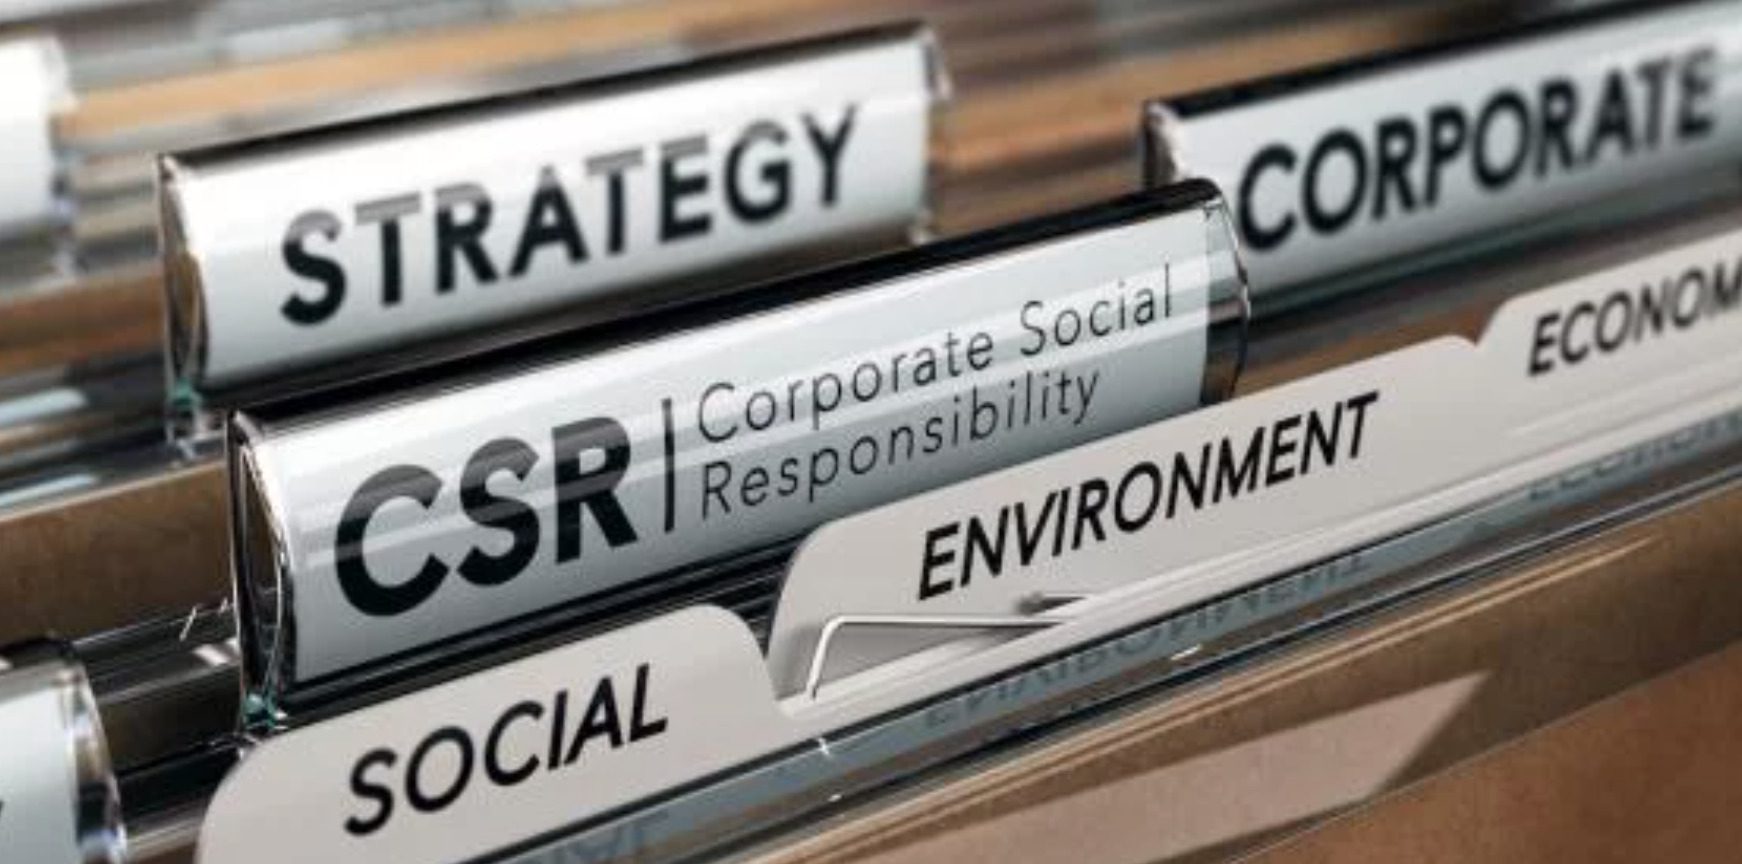 corporate sustainability